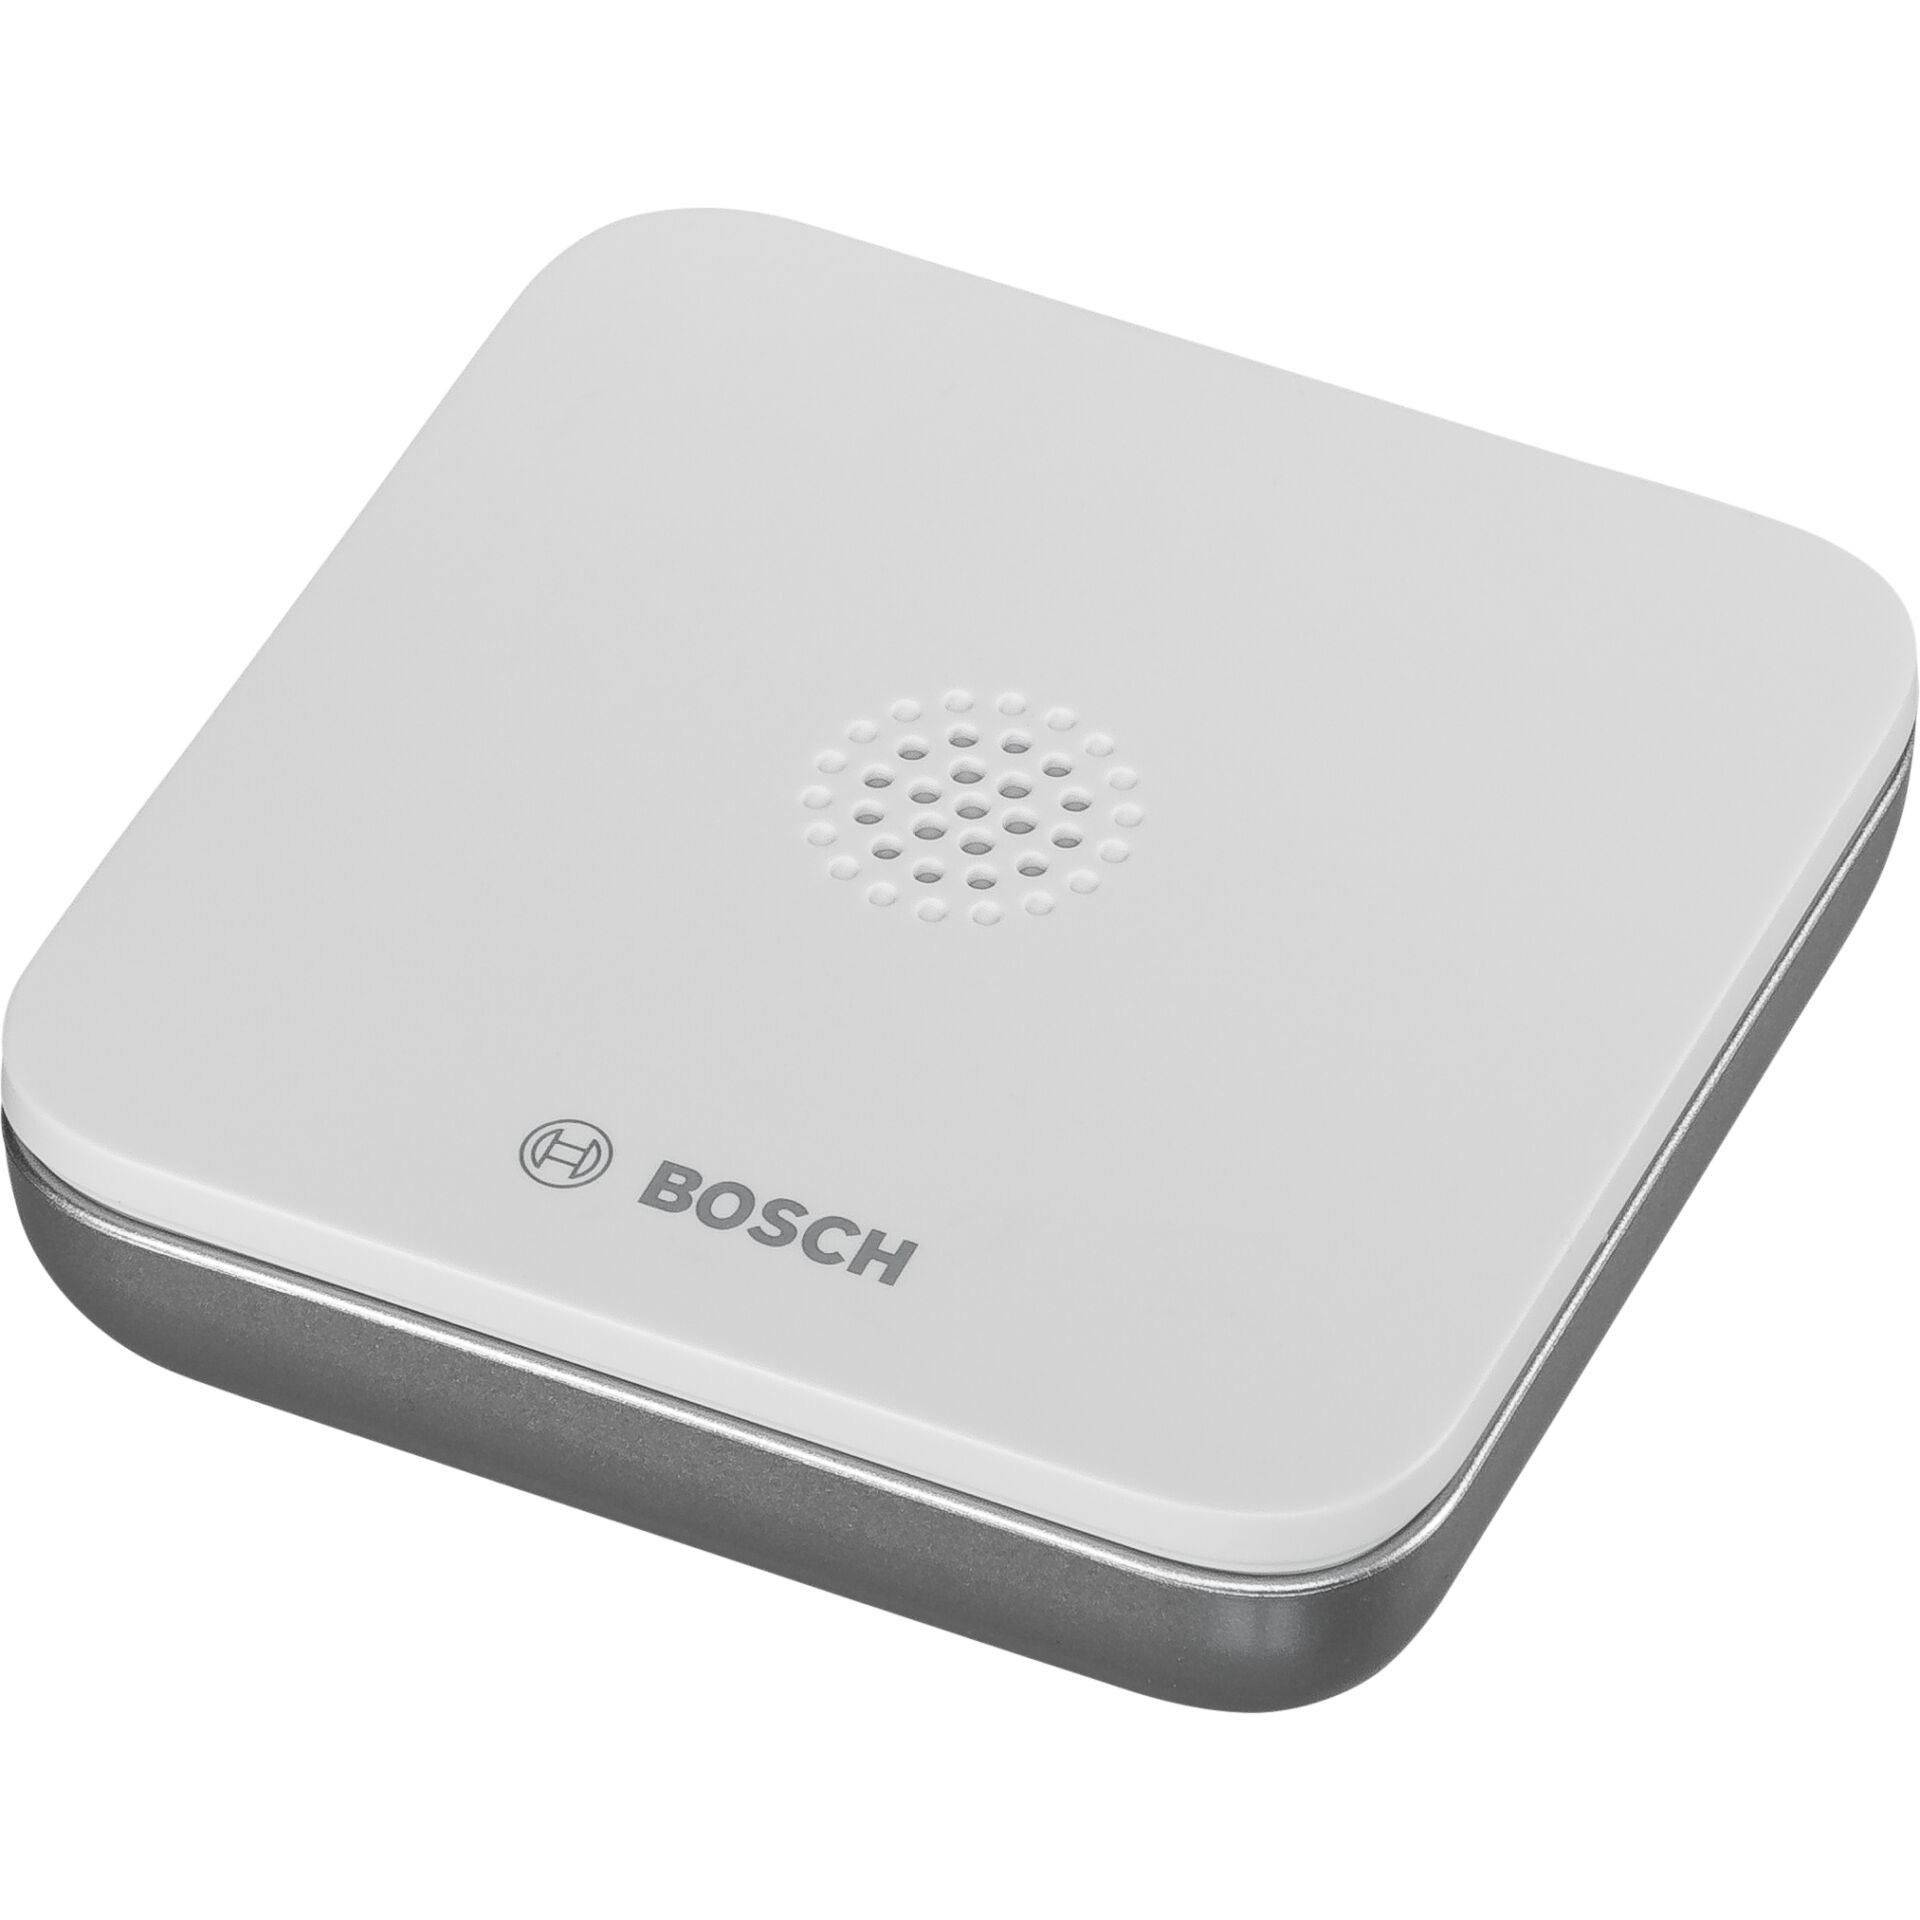 Bosch Smart Home Water Alarm